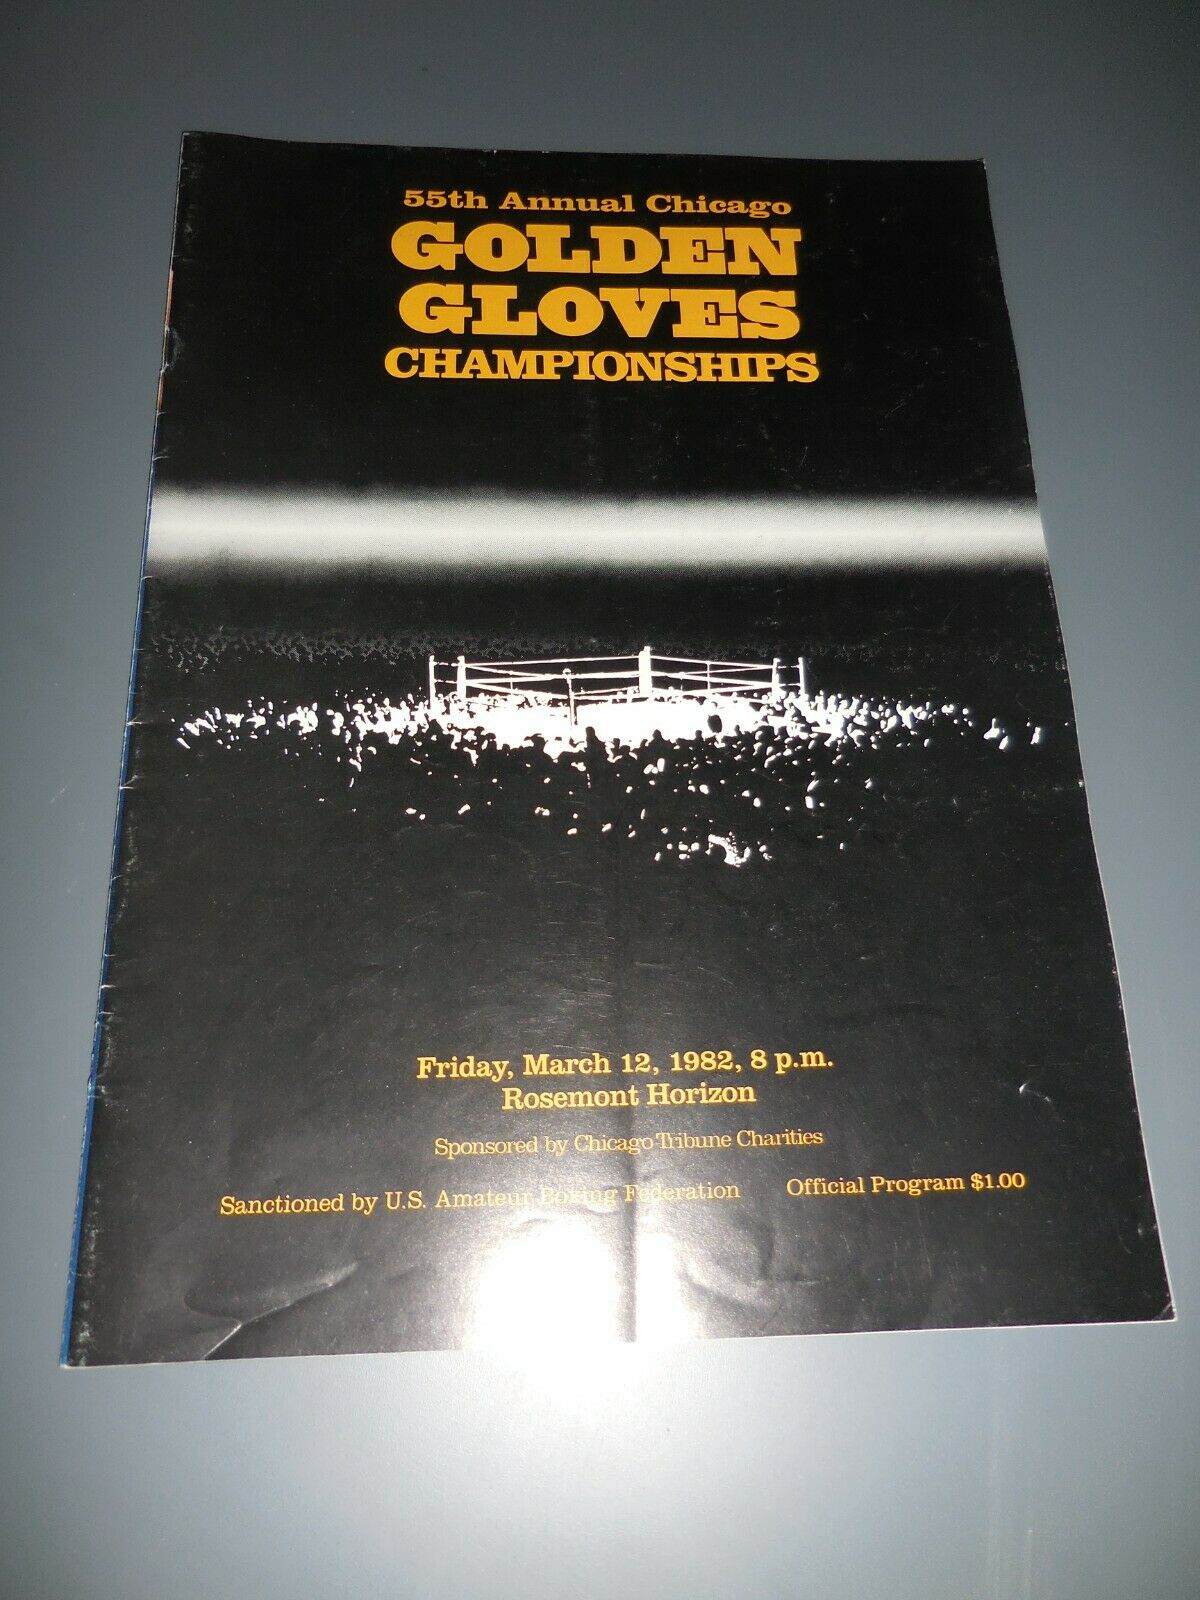 1982 55th Annual Chicago Golden Gloves Championship Program